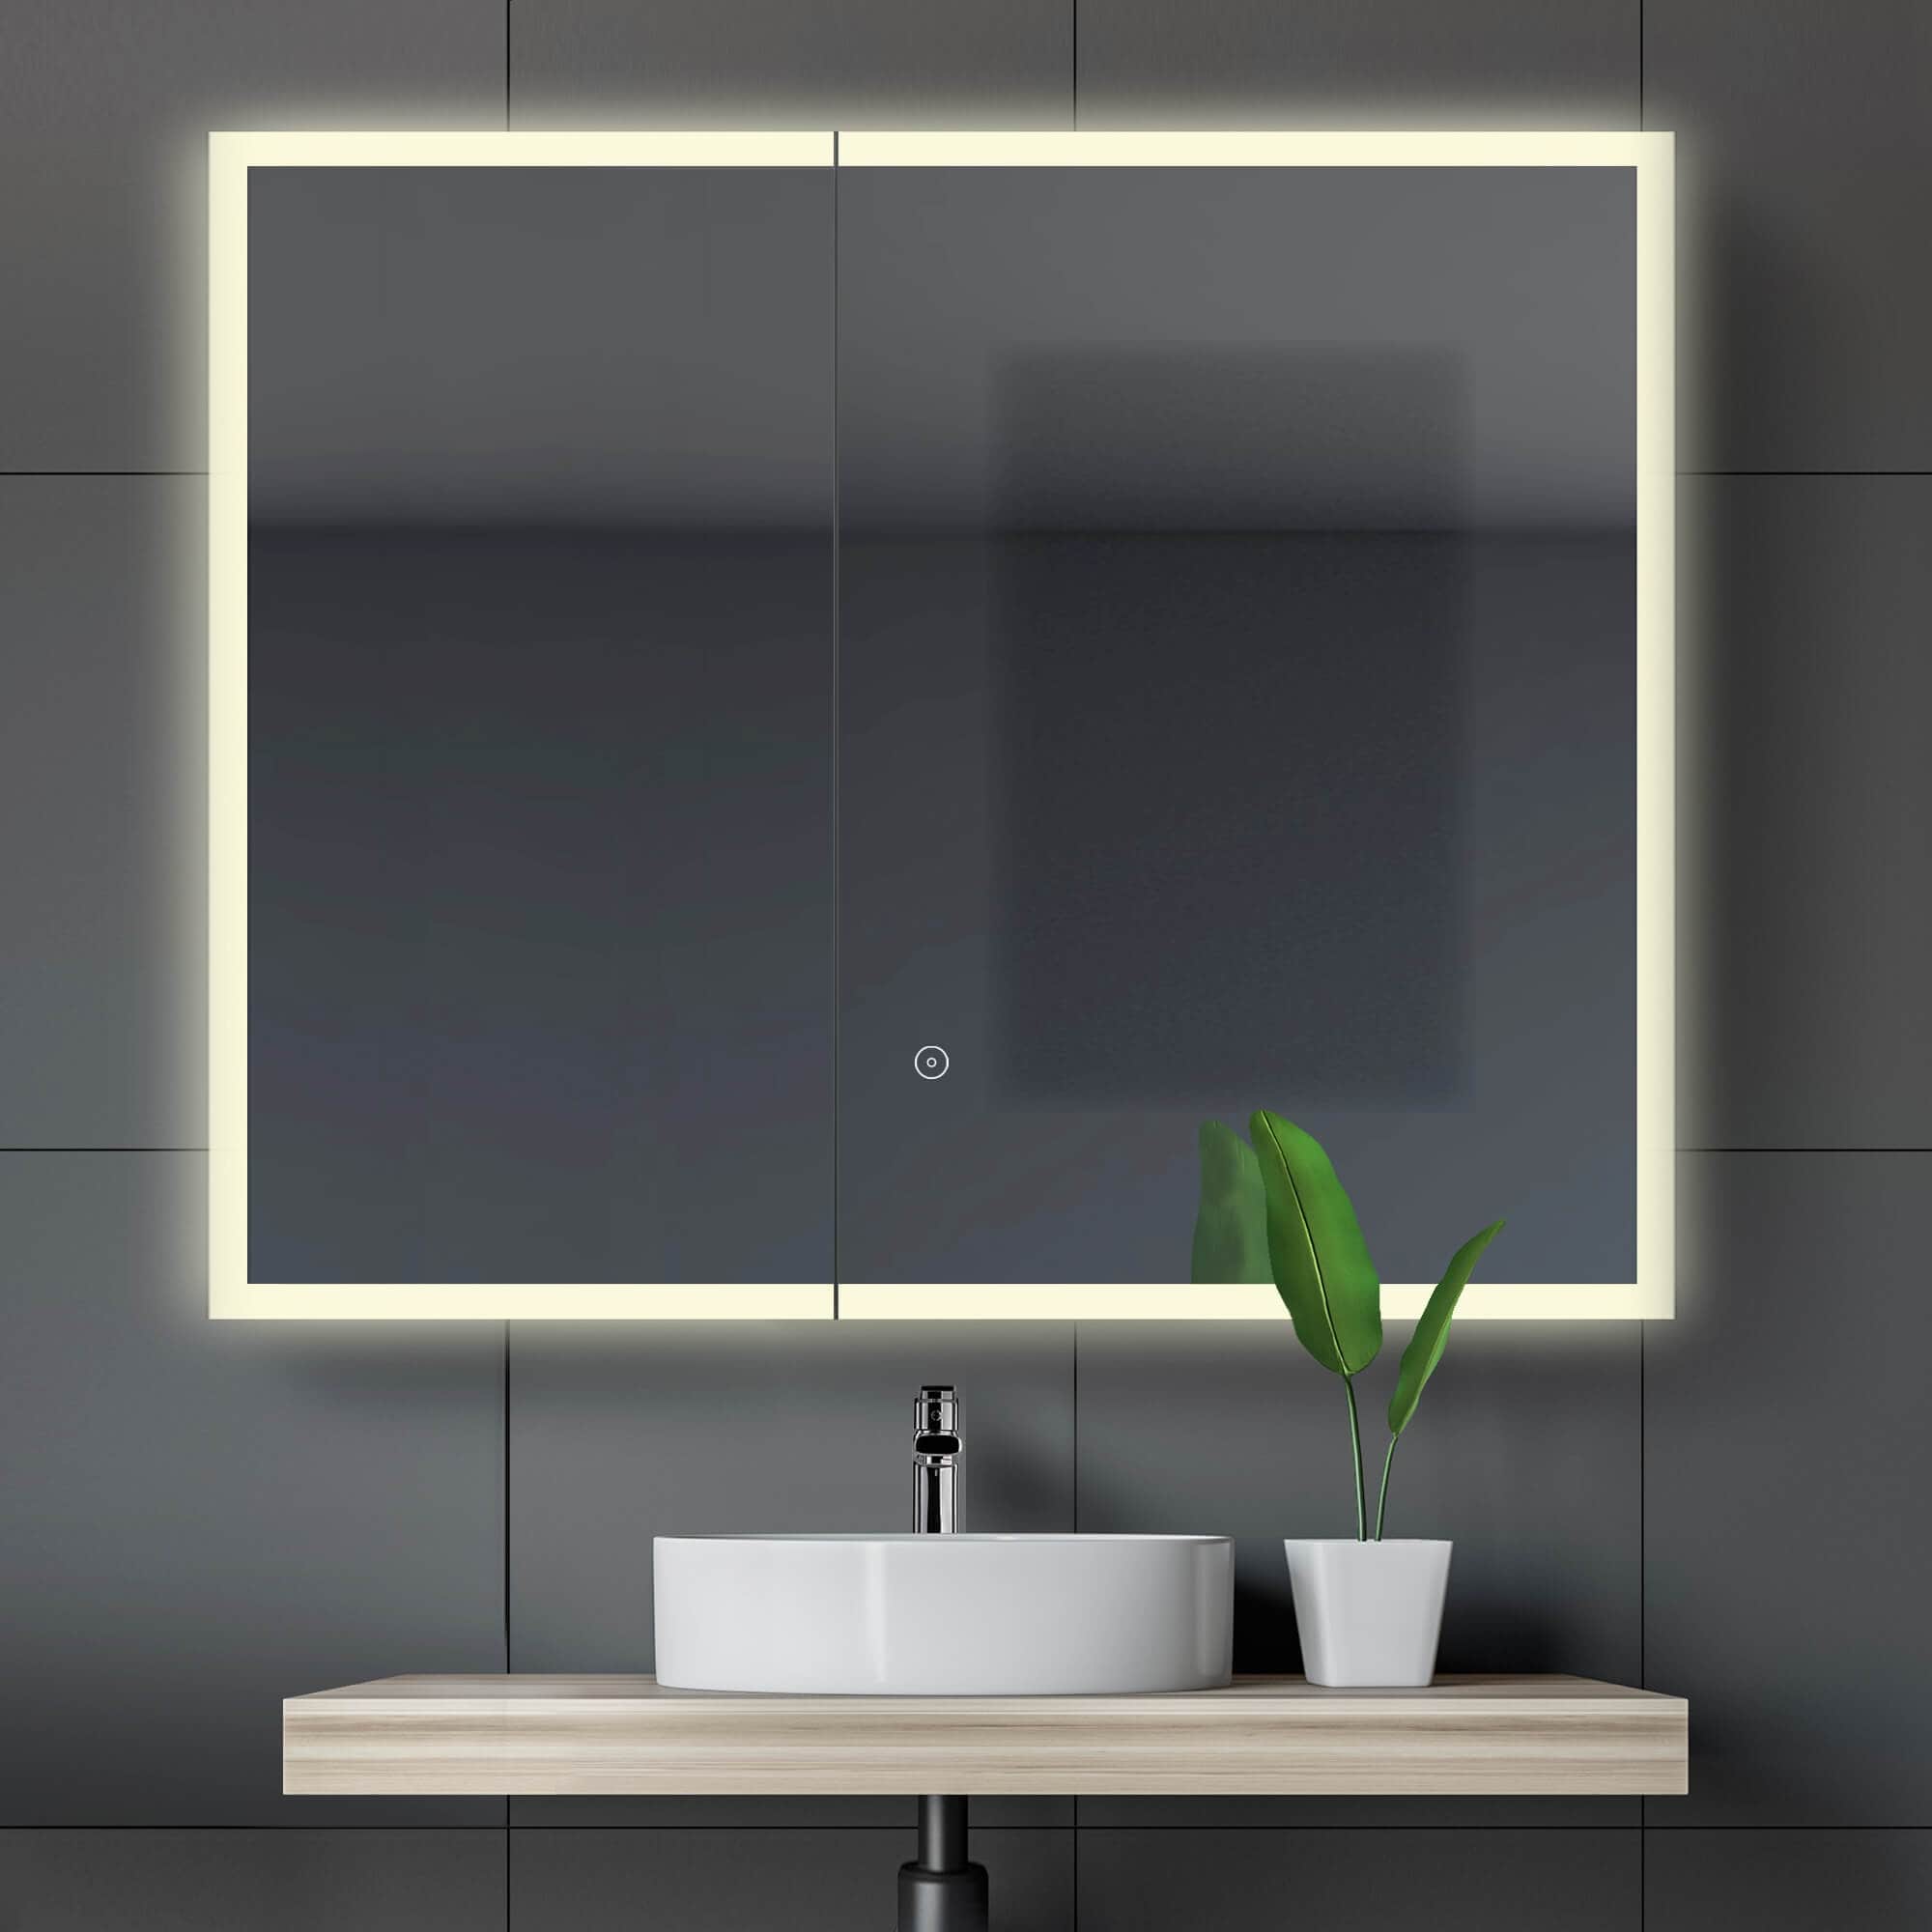 https://ak1.ostkcdn.com/images/products/is/images/direct/ecca8c9e19df21eb8e7dbe2e890ec316be8a1058/Bathroom-Medicine-Cabinet%2C-Aluminum%2C-Recessed-Surface-Mount%2C-Mirrored-Interior-w-LED.jpg